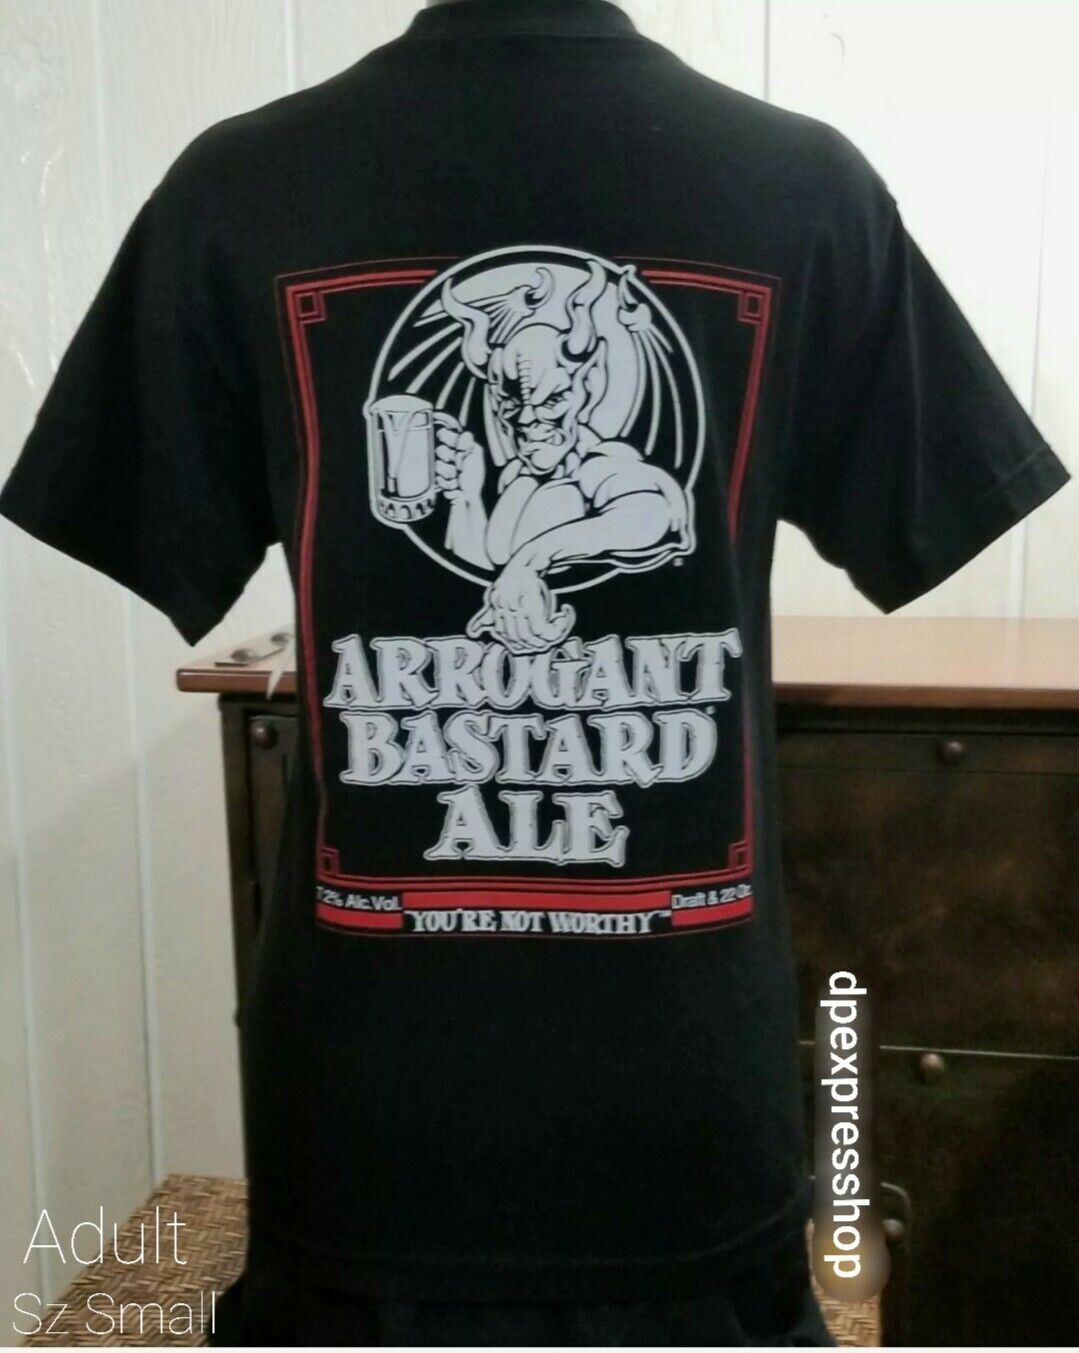 Stone Brewing Co ARROGANT BASTARD ALE Logo Beer Black Adult T-Shirt Sz S NWT